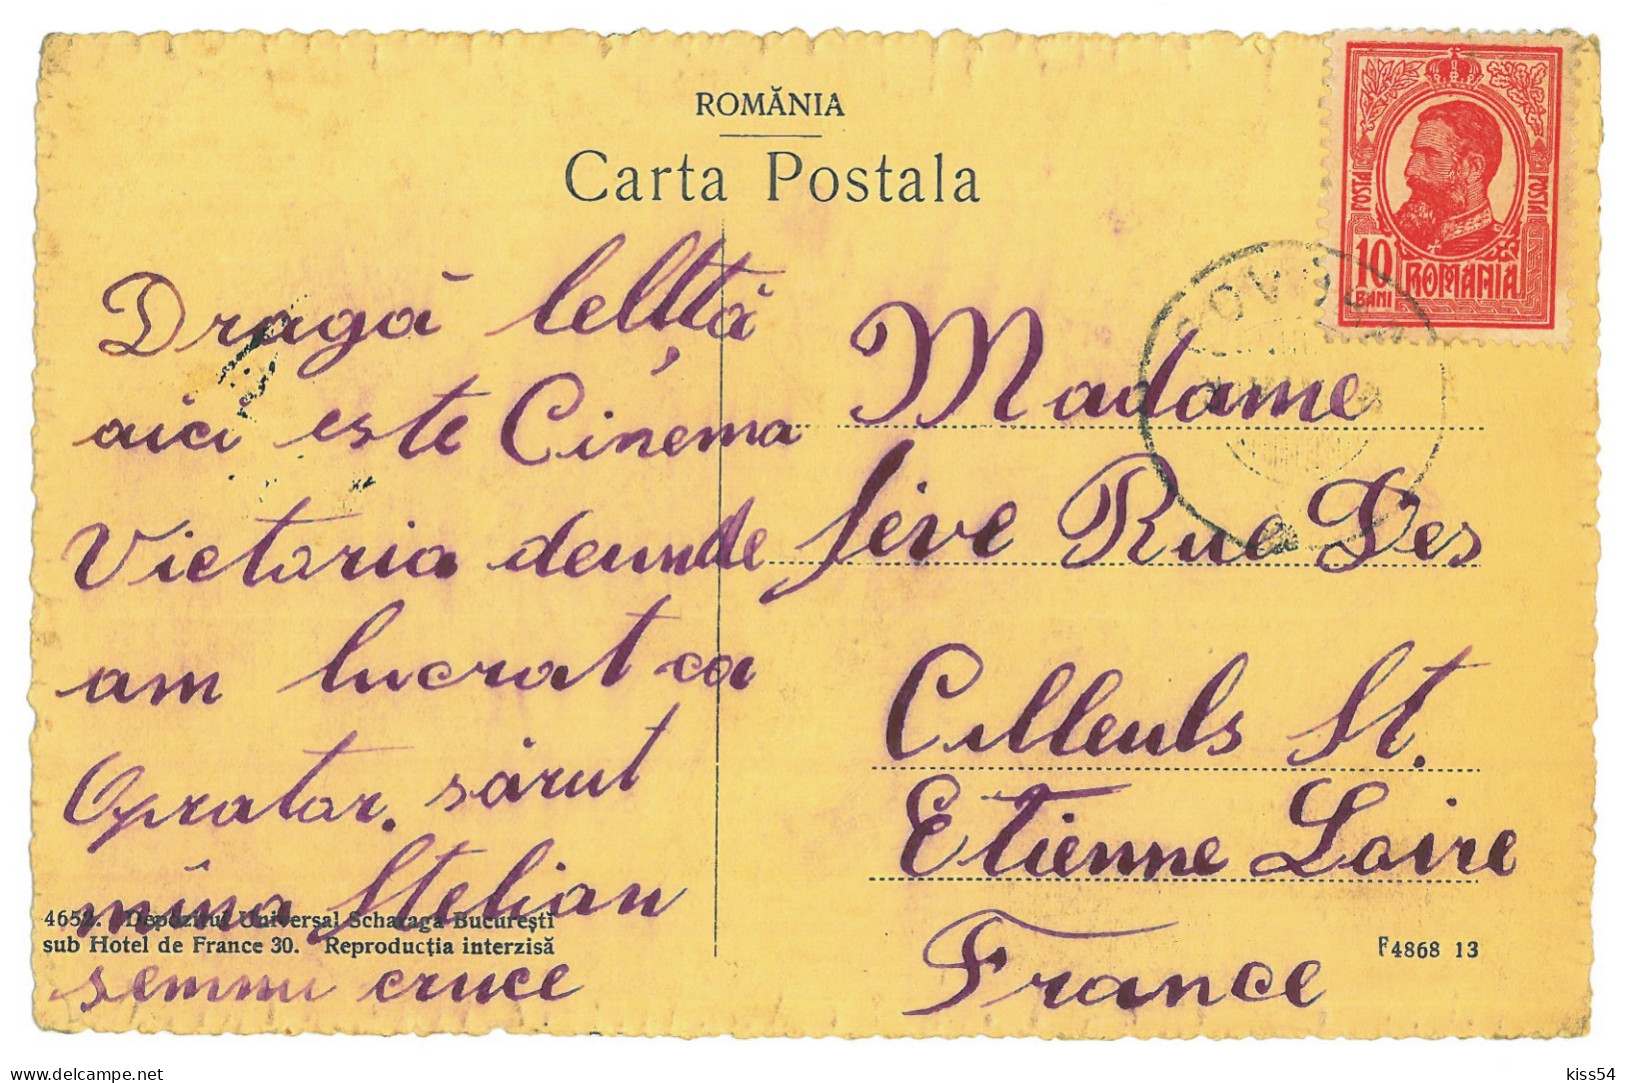 RO 83 - 24315 BUCURESTI, Caffe Royal, Romania - Old Postcard - Used - Rumänien